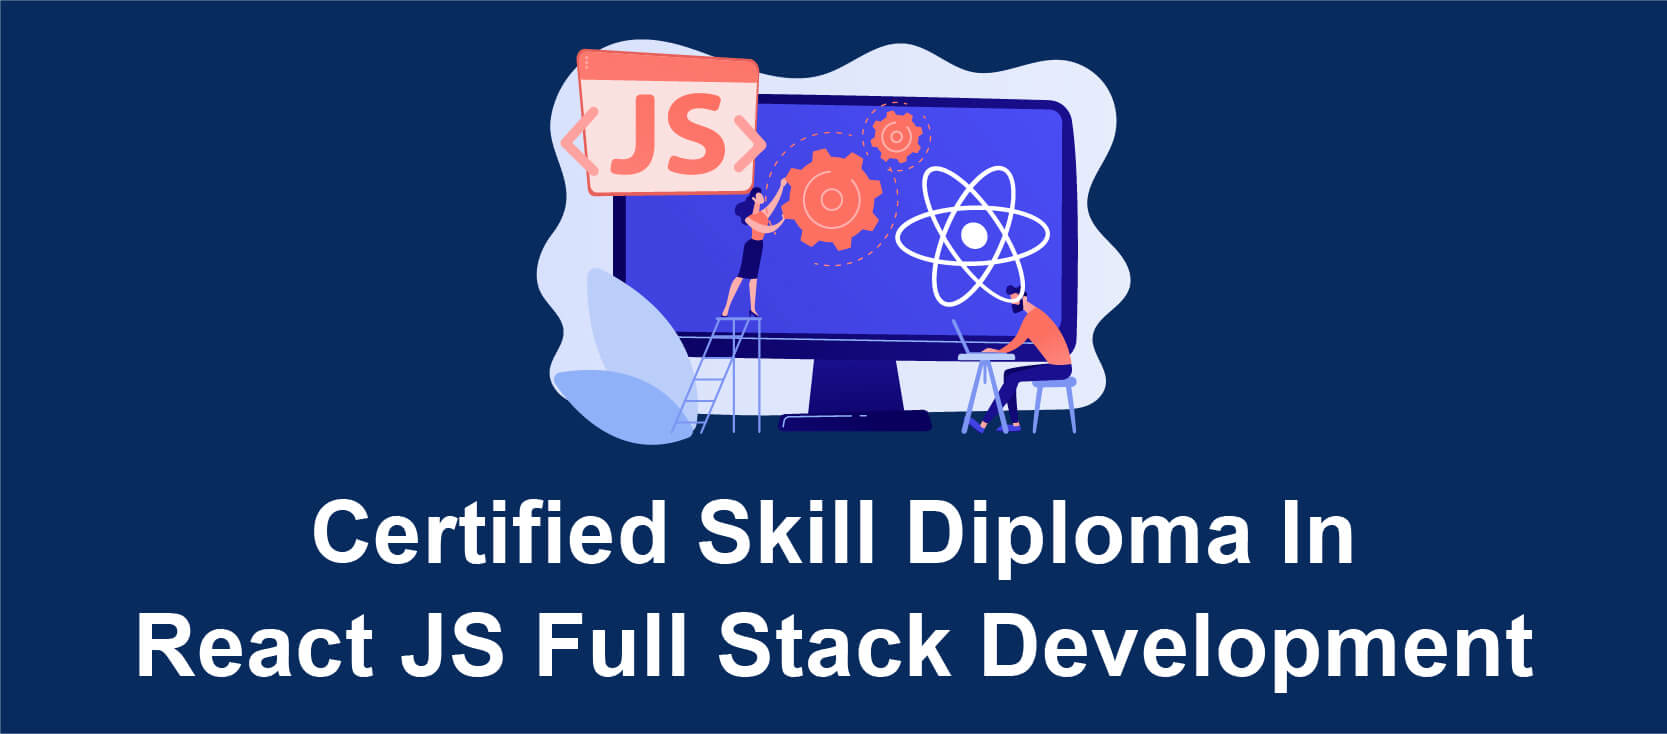 AngularJS Full-Stack Development Course